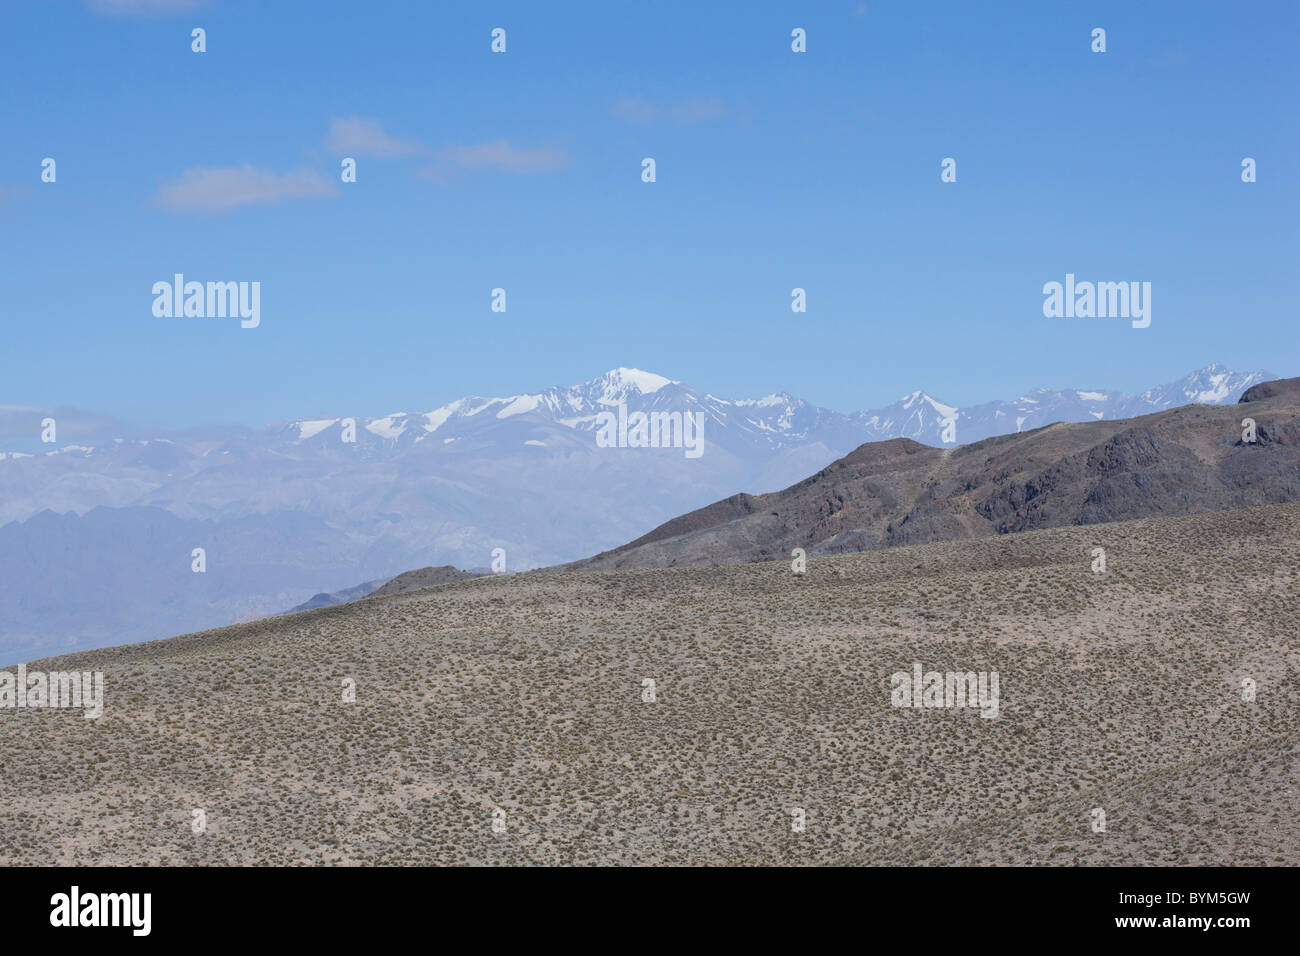 Andes Mountain Range Snowcapped Landscape Nature Stock Photo